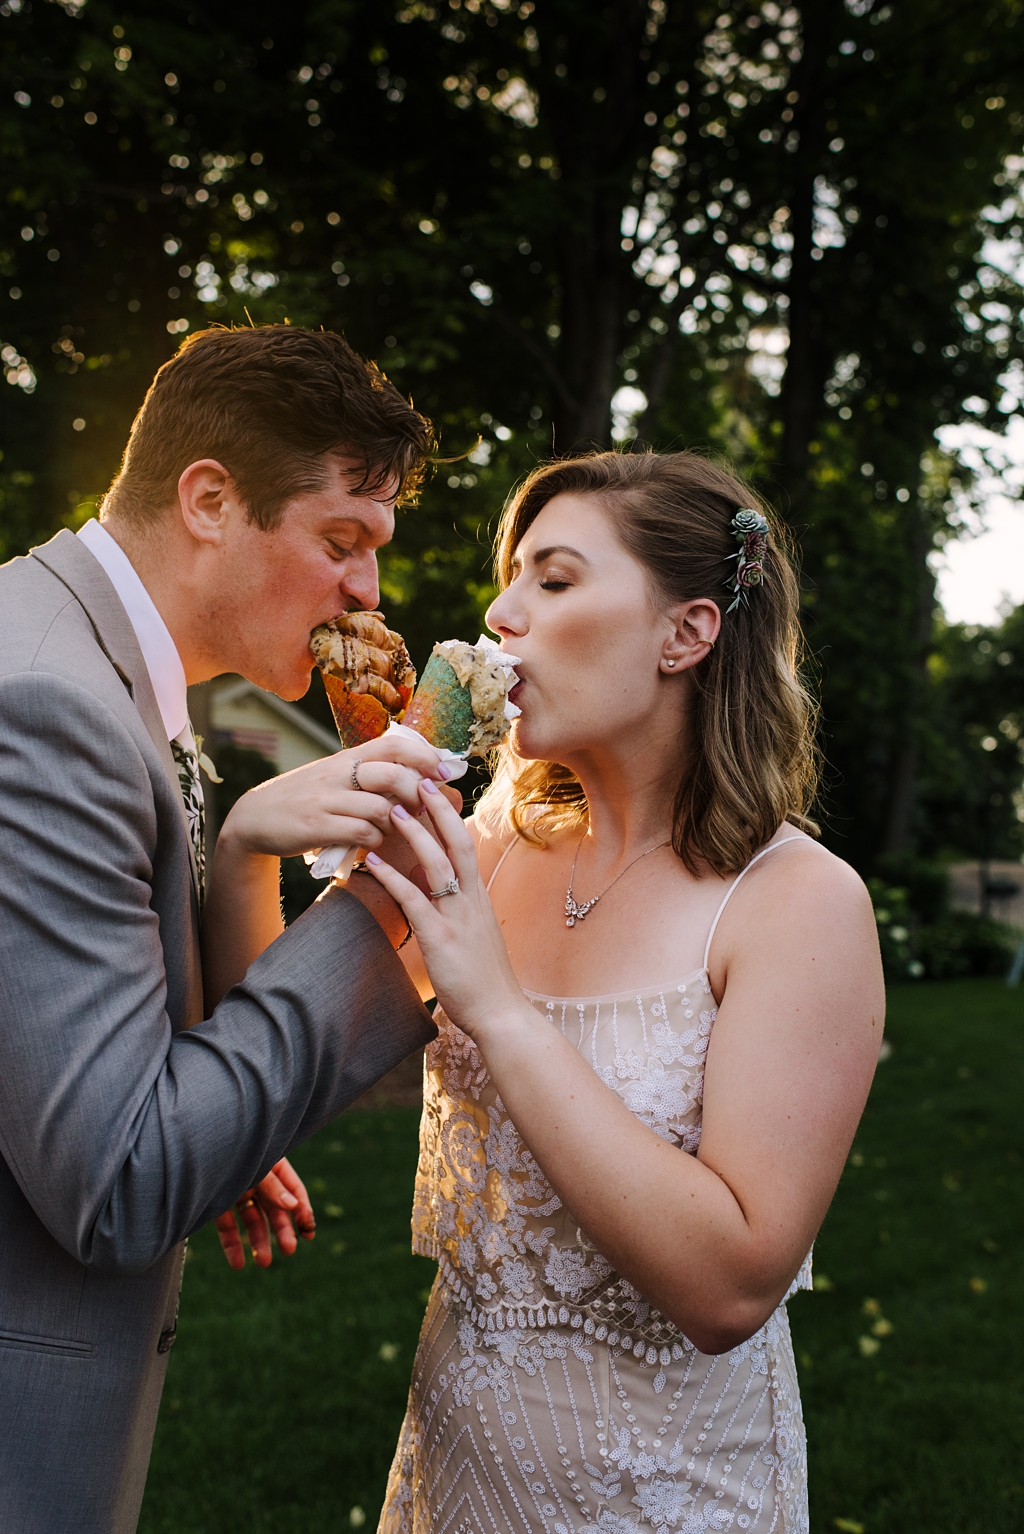 newlyweds share ice cream at wedding reception at sunset